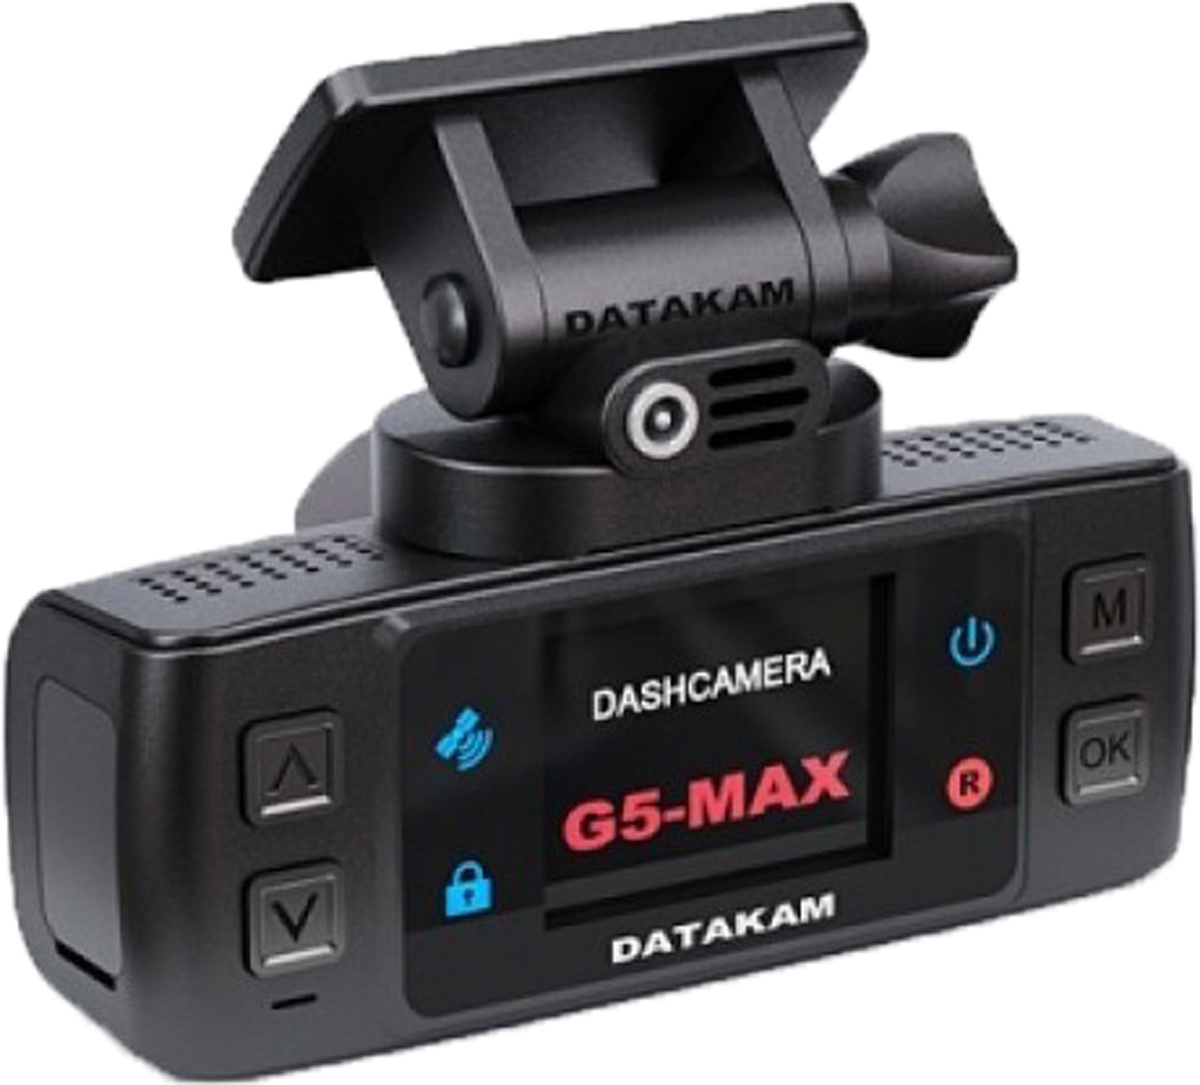 Регистратор купить в спб. DATAKAM Duo Pro. DATAKAM g5 real. DATAKAM g5 real bf. Видеорегистратор DATAKAM g5 real Max, GPS, ГЛОНАСС.